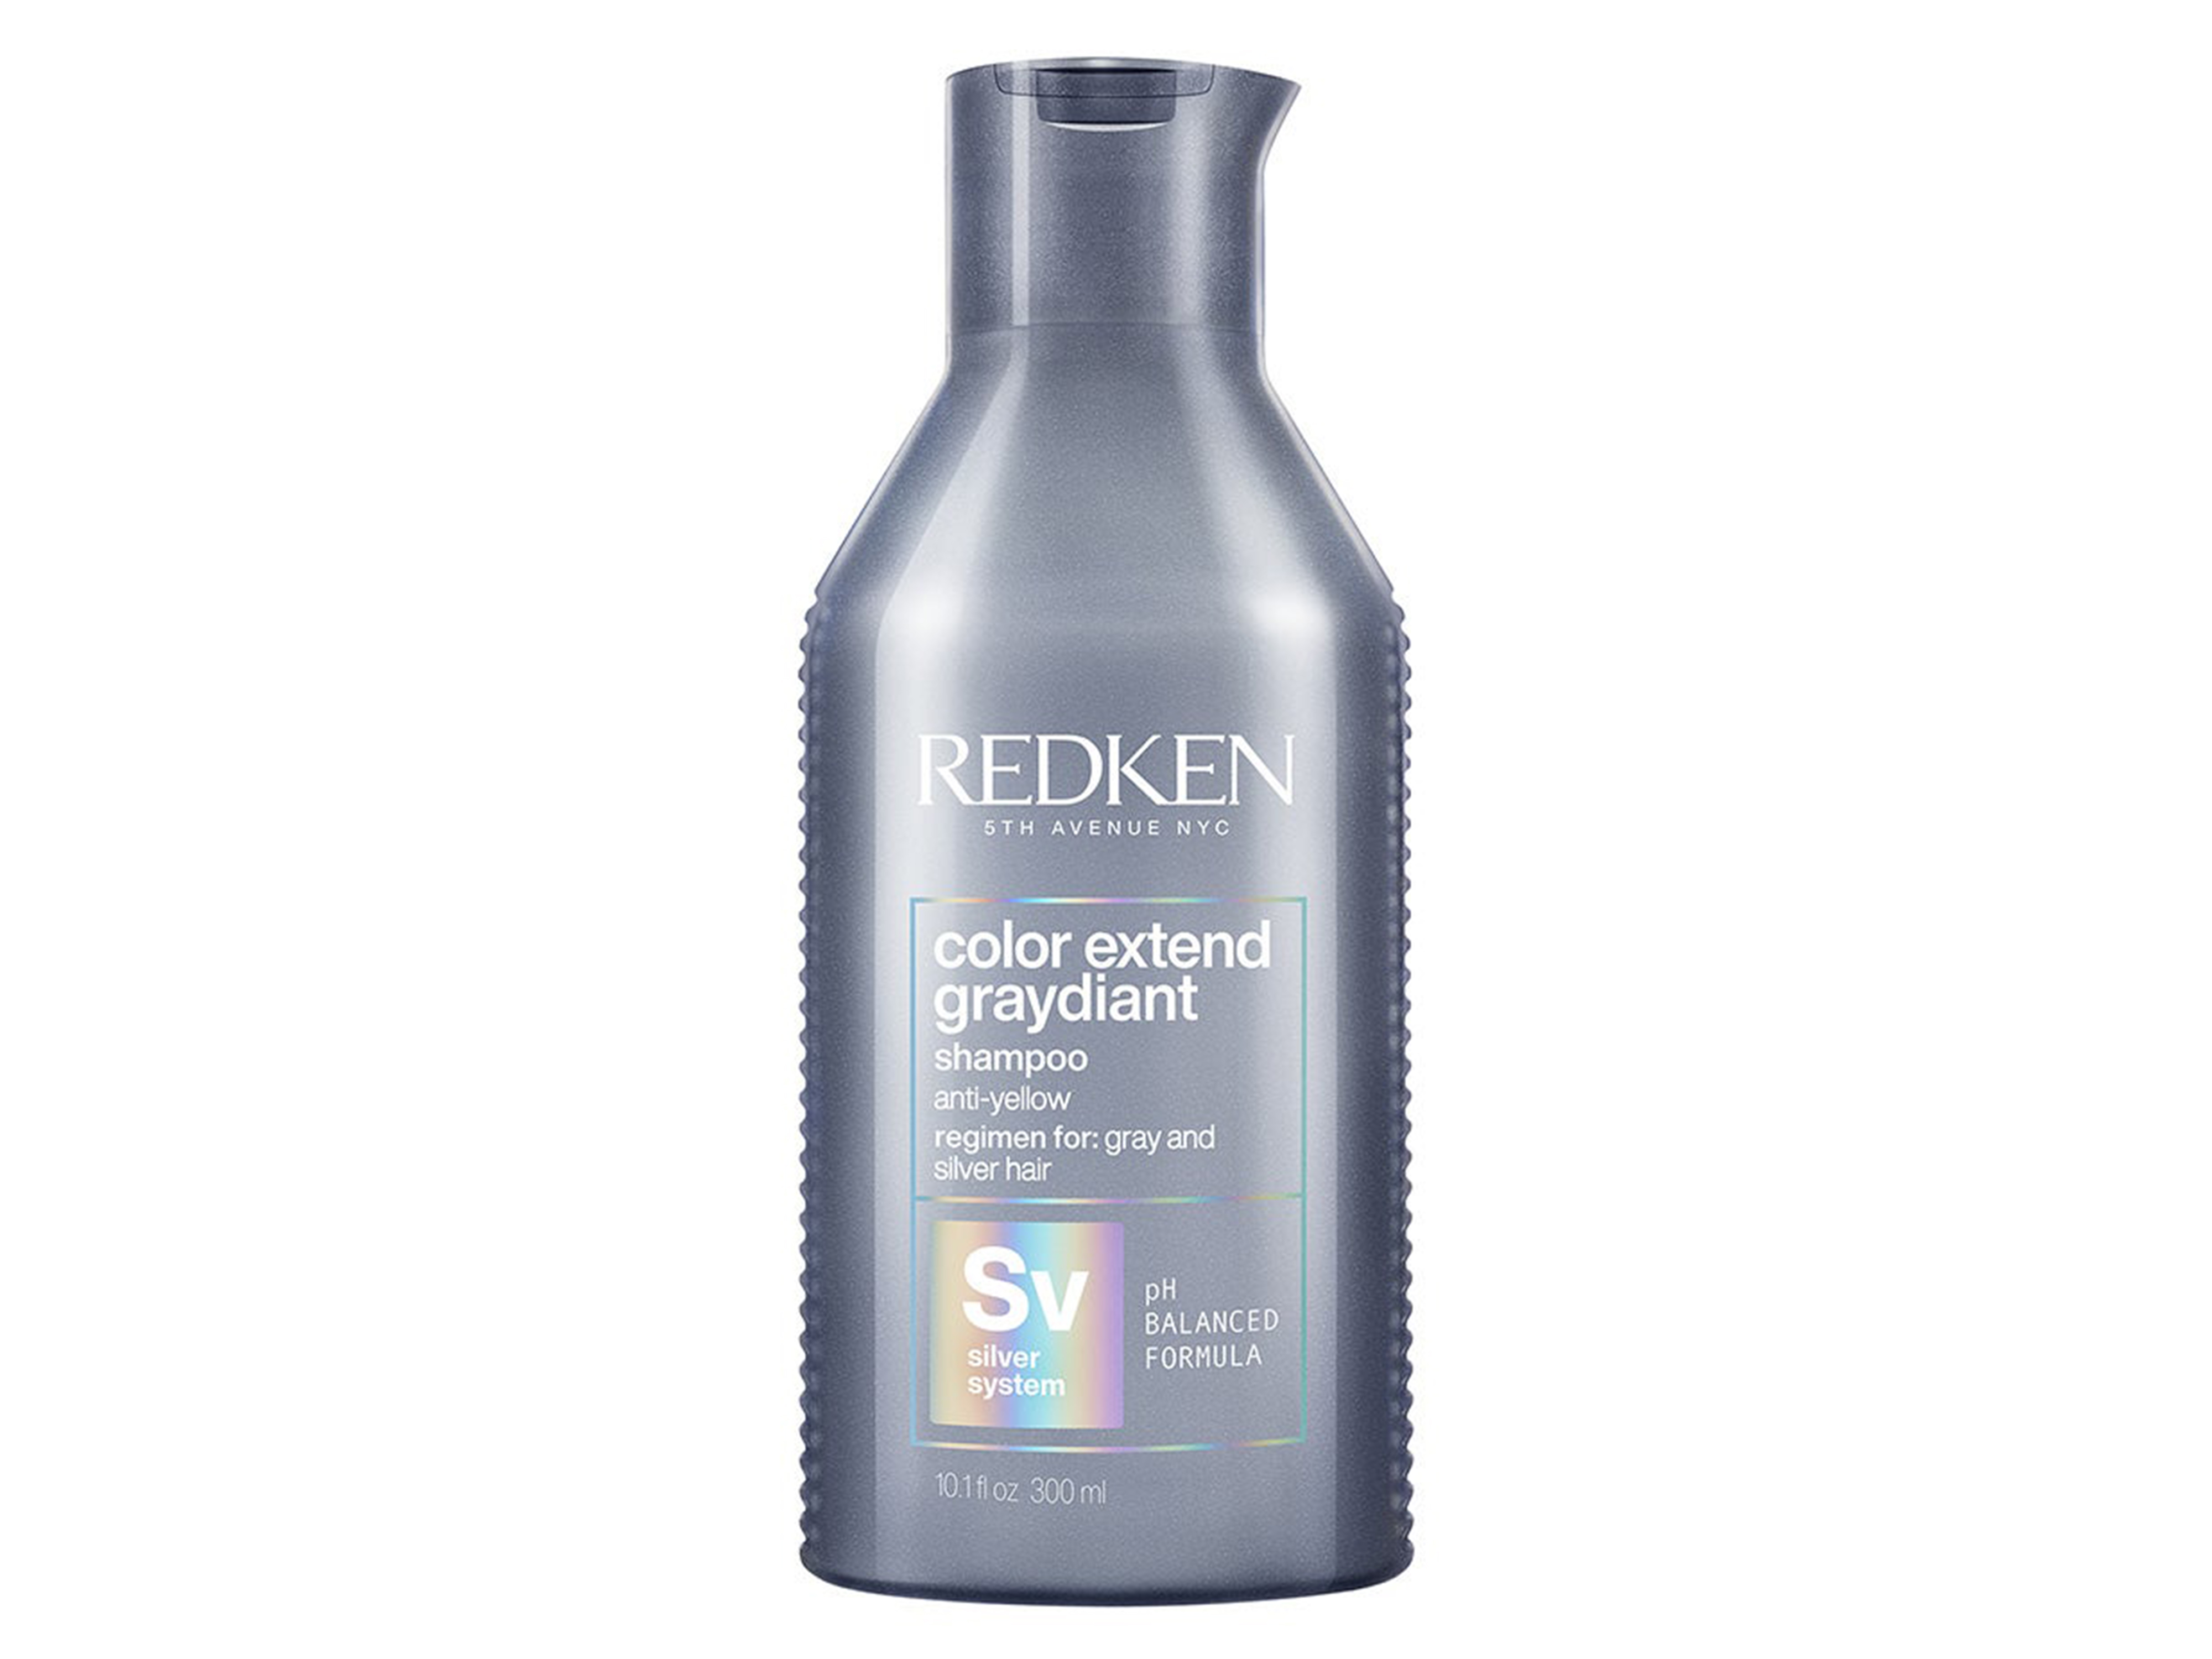 Redken Color Extend Graydiant Shampoo, 300 ml